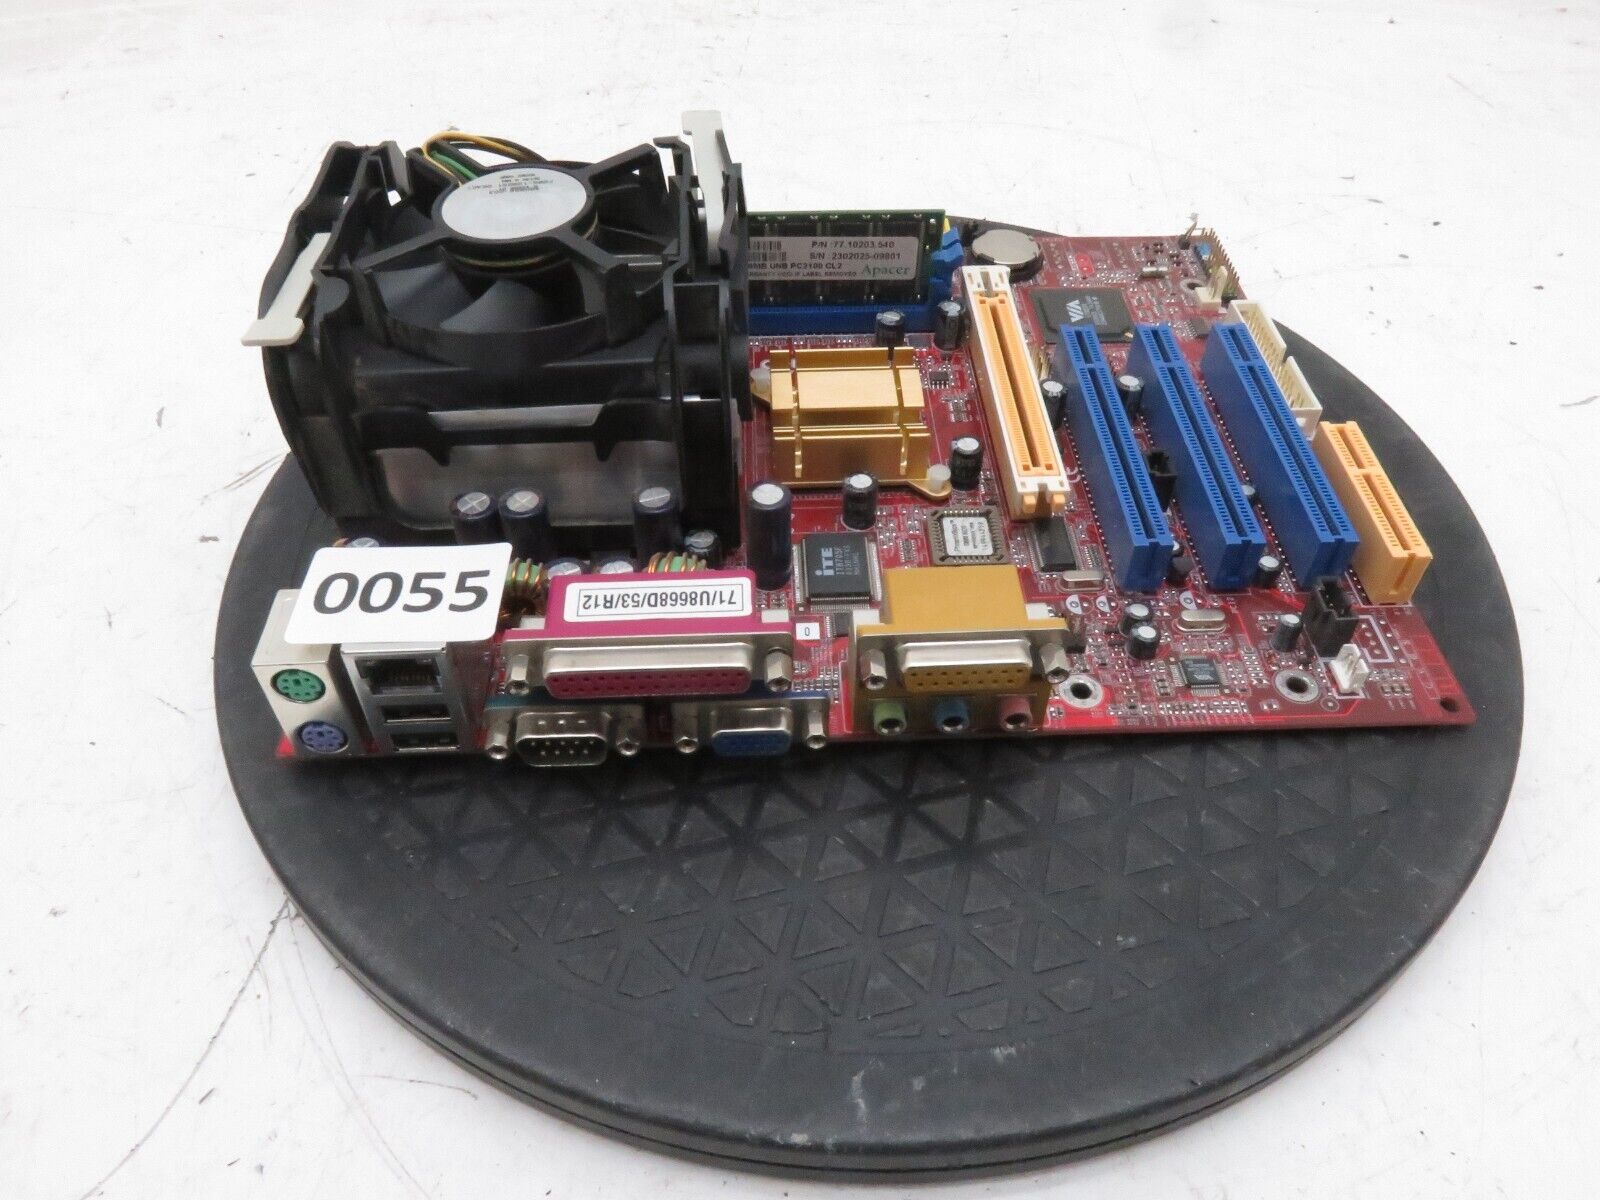 Biostar U8668-D Motherboard w/ Intel Celeron 1.7GHz 256MB Ram - Damaged Cooler